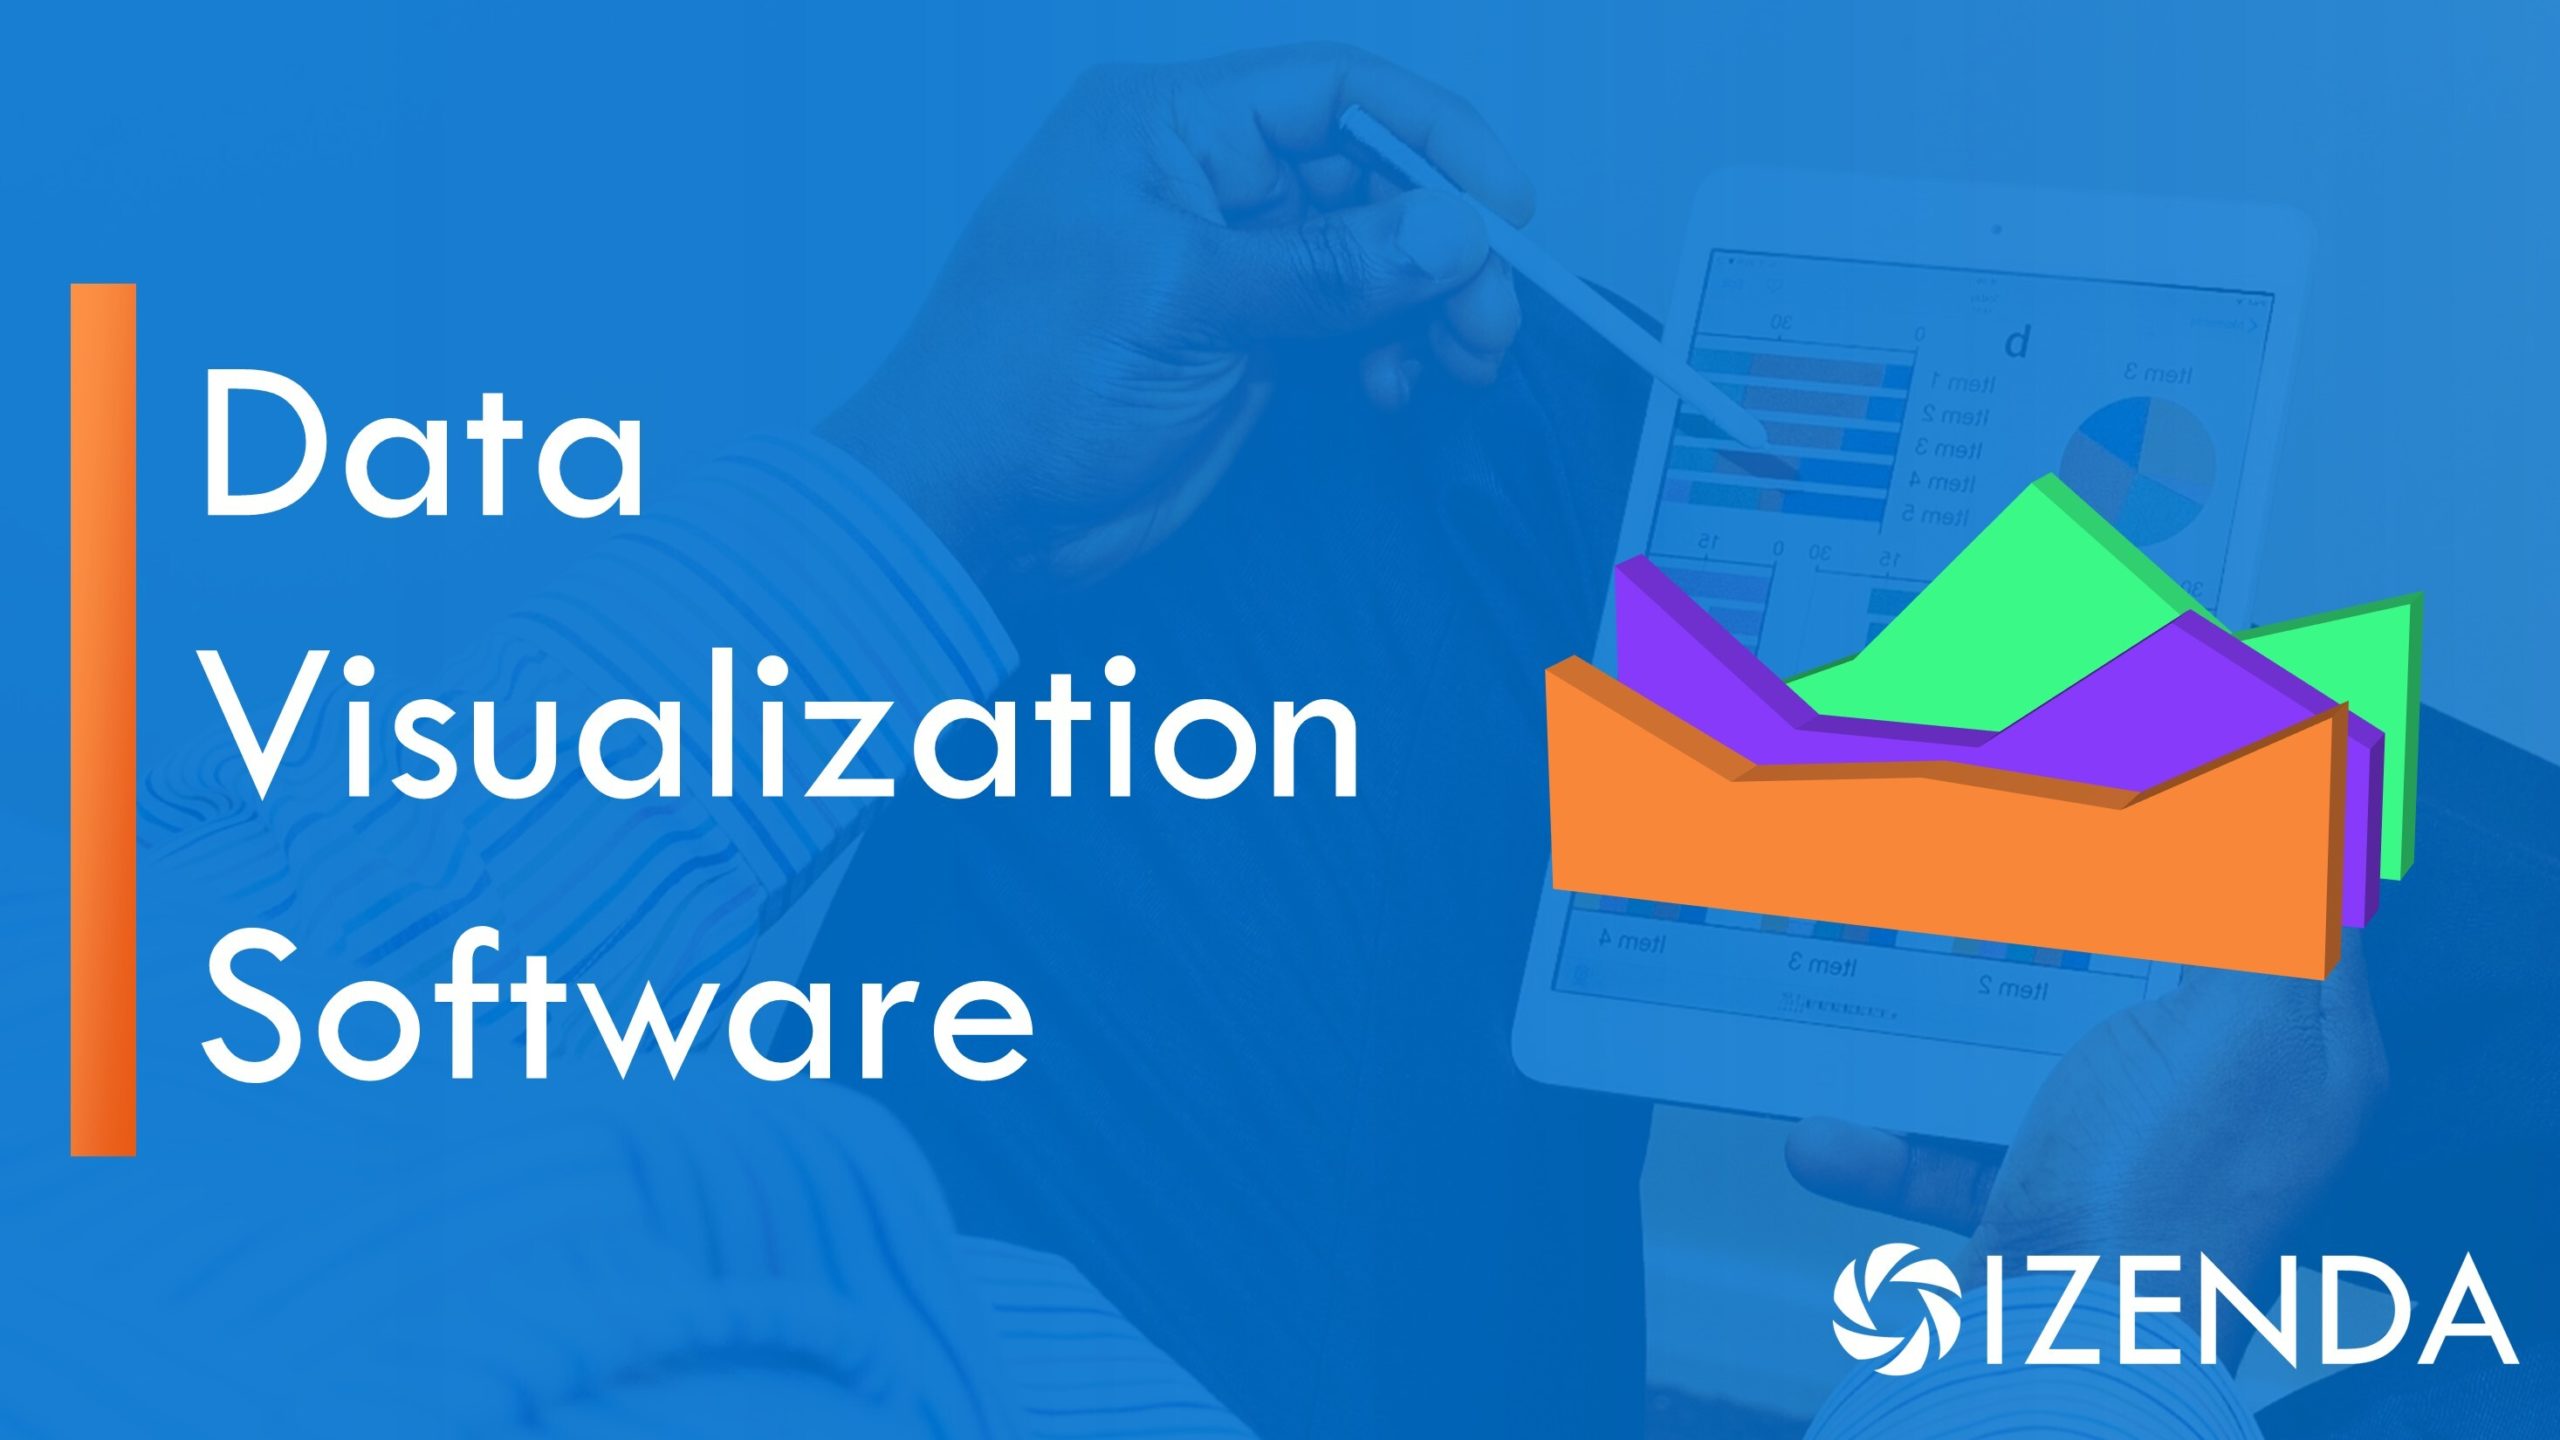 data visualization software from izenda